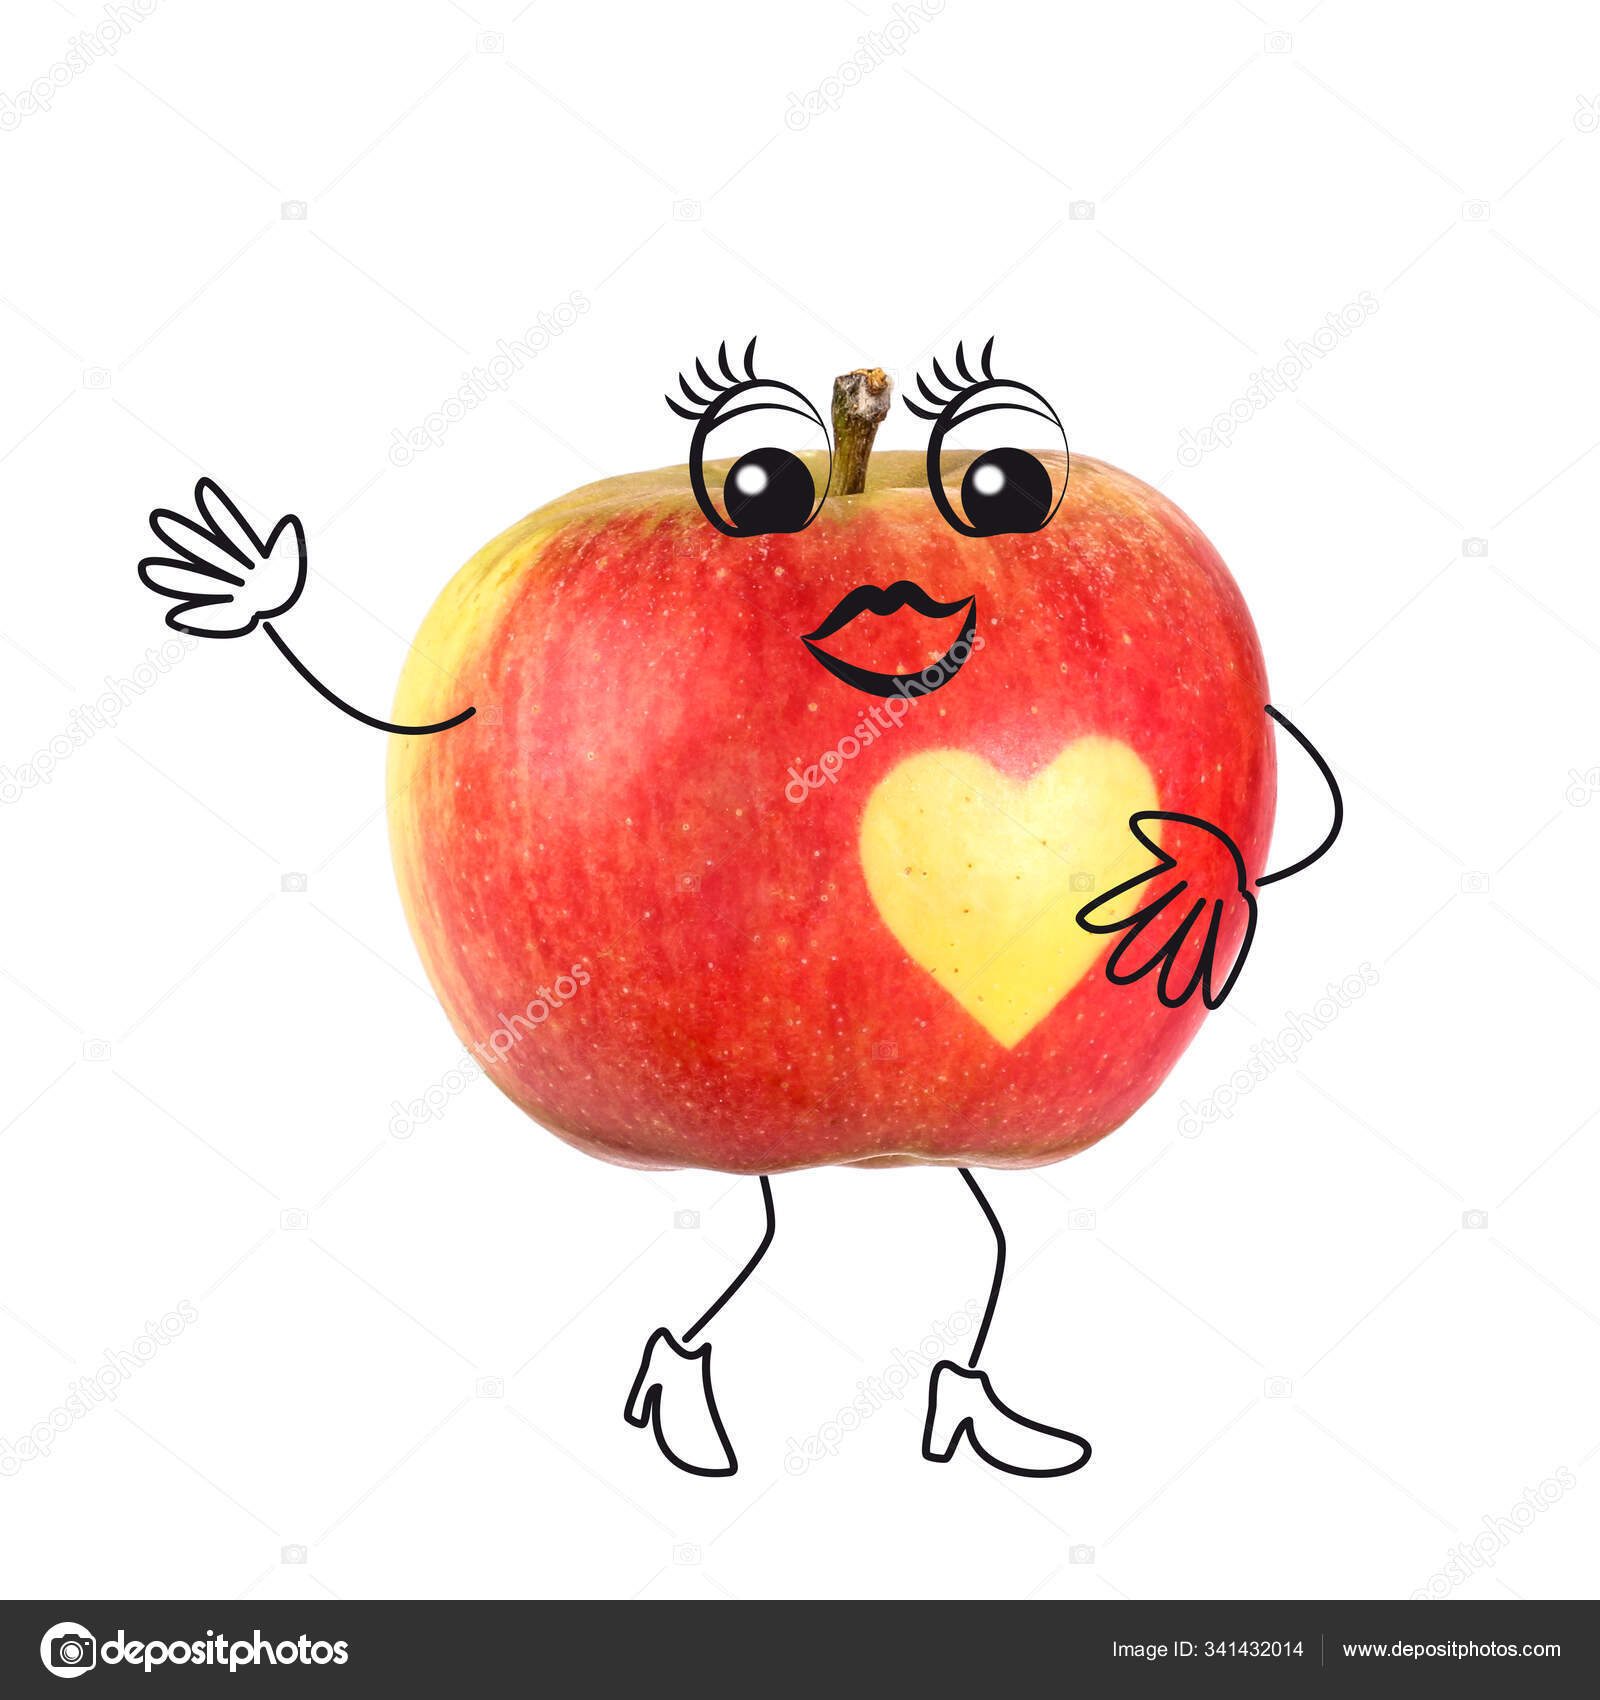 Divertido Personaje Dibujos Animados Con Frutas Verduras: fotografía de  stock © PantherMediaSeller #341432014 | Depositphotos